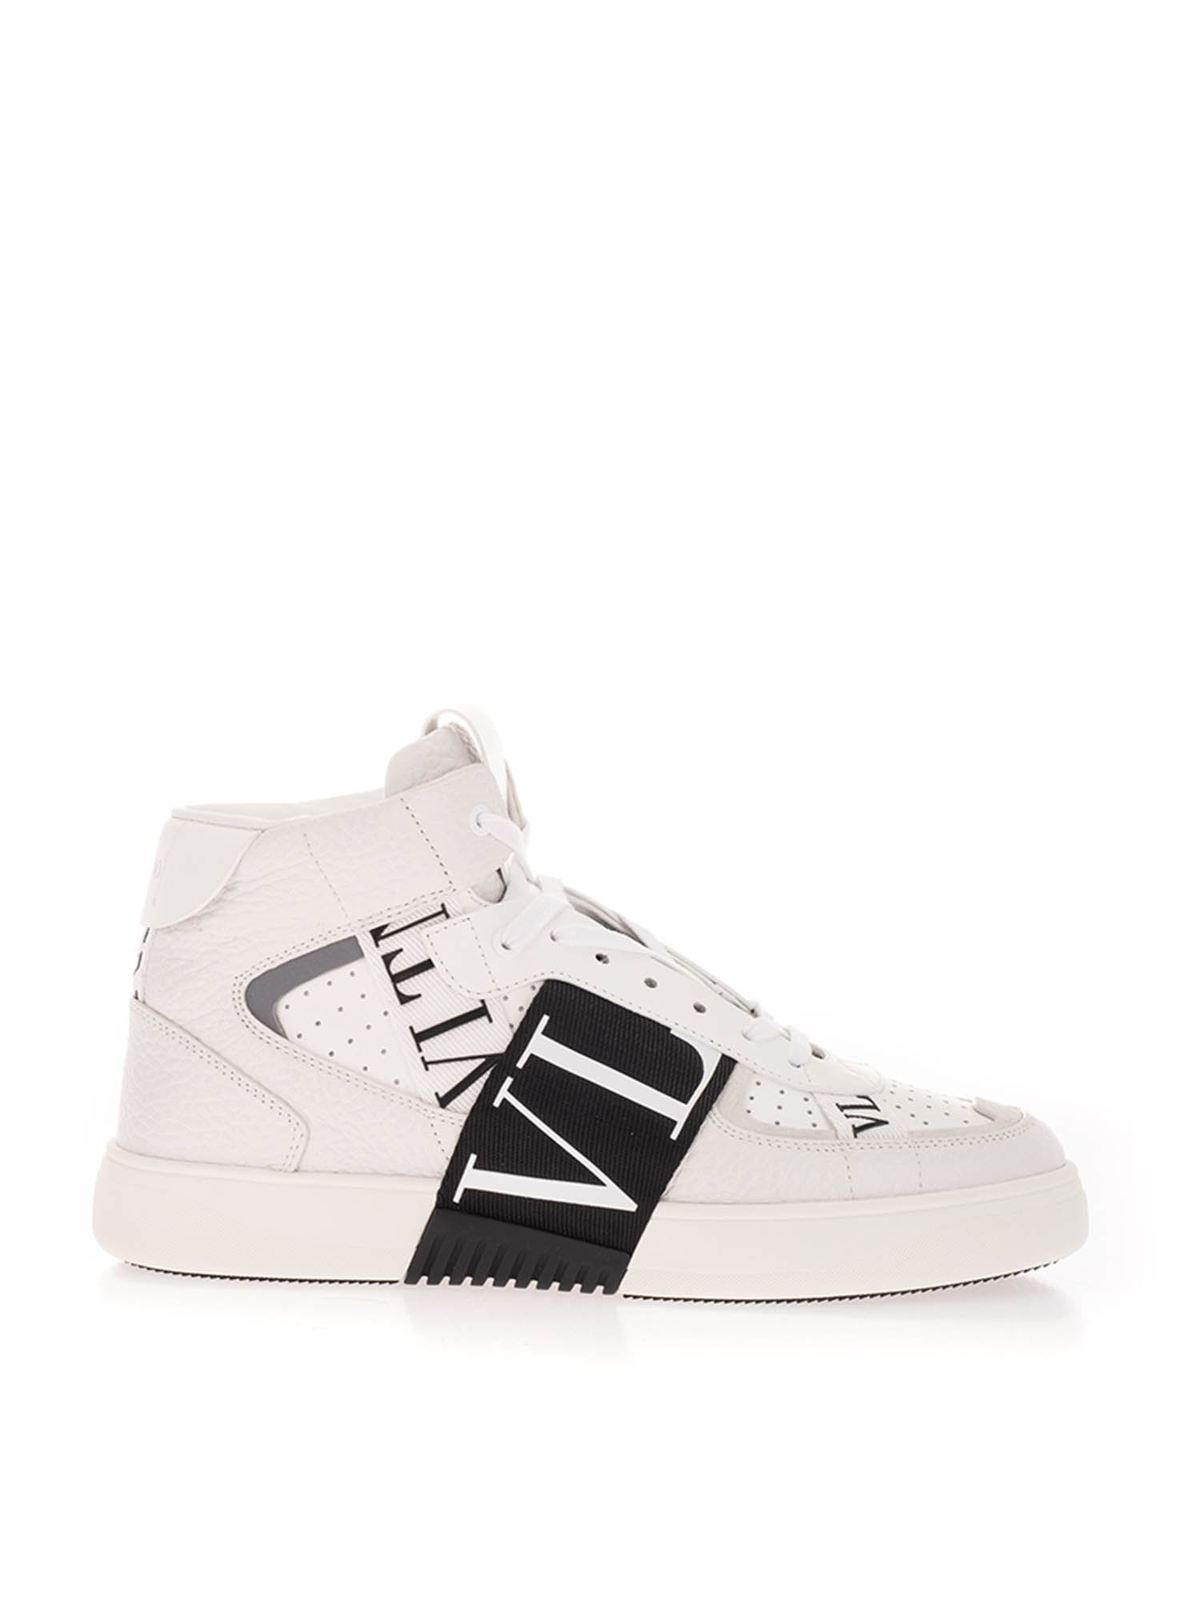 Valentino Garavani Vl7n High Top Sneakers In White And Black | ModeSens